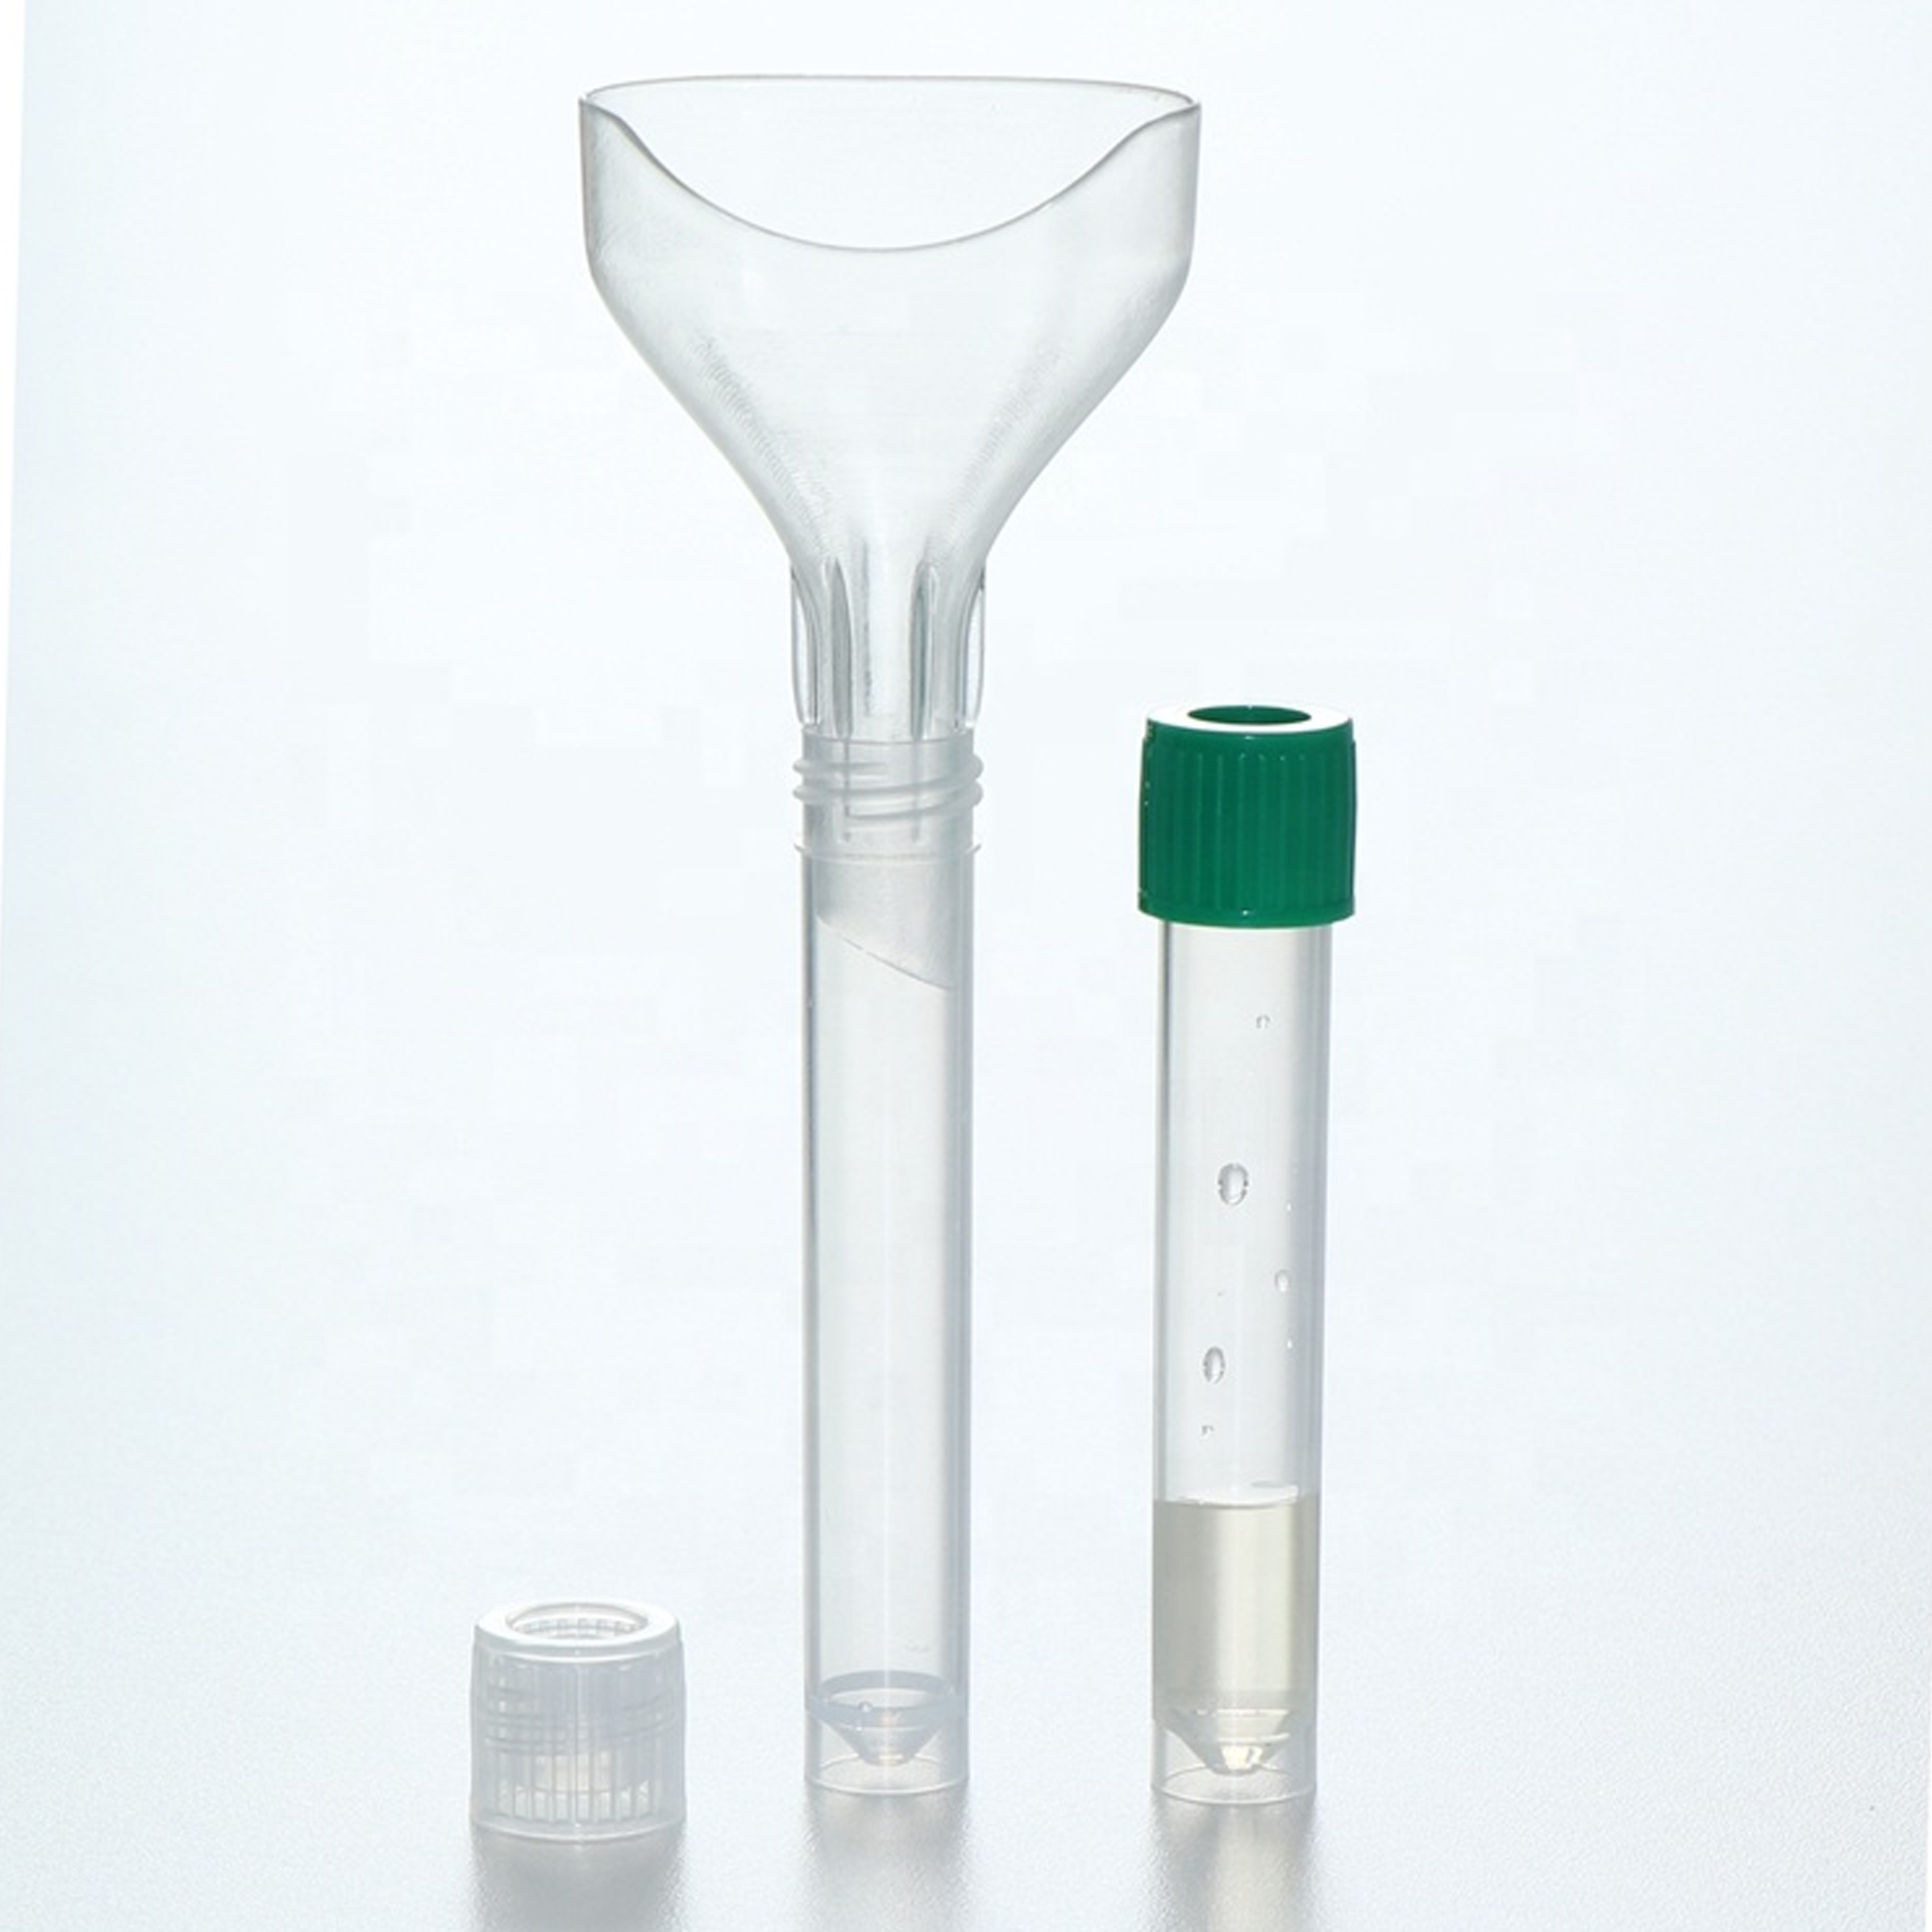 DNA/Rna Sterile V Shape Collecting Funnel Test Sample Tube